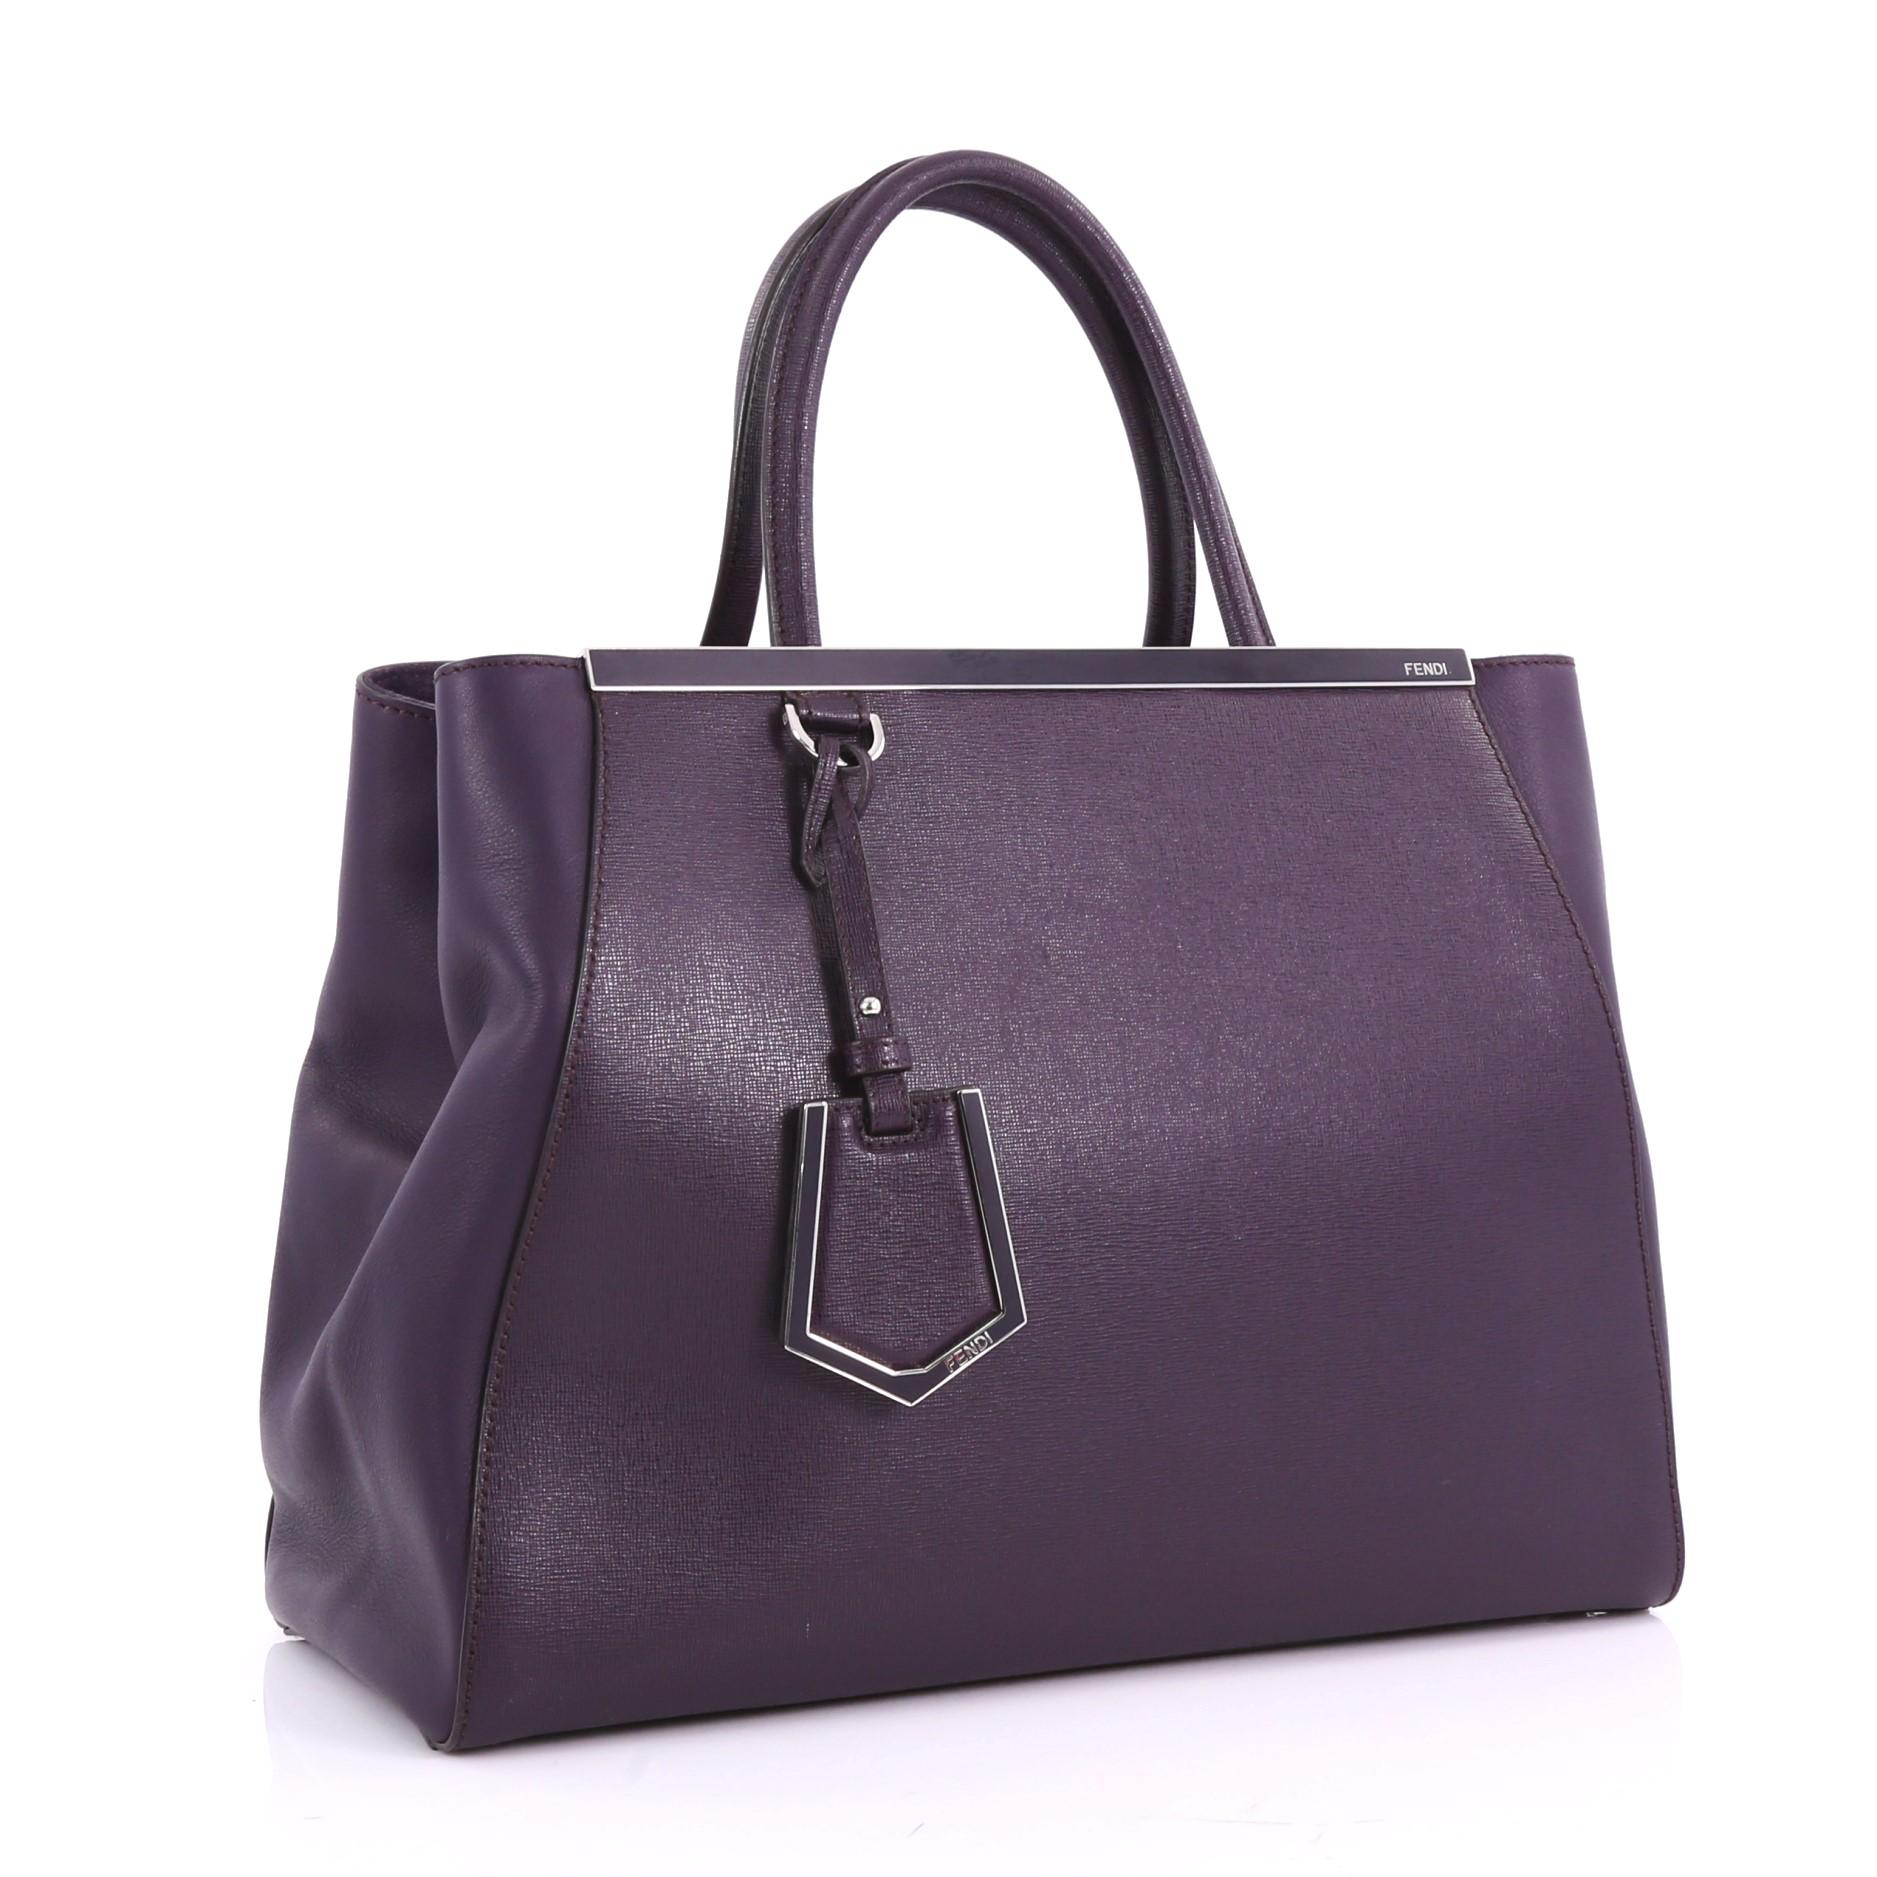 Black Fendi 2Jours Handbag Leather Large